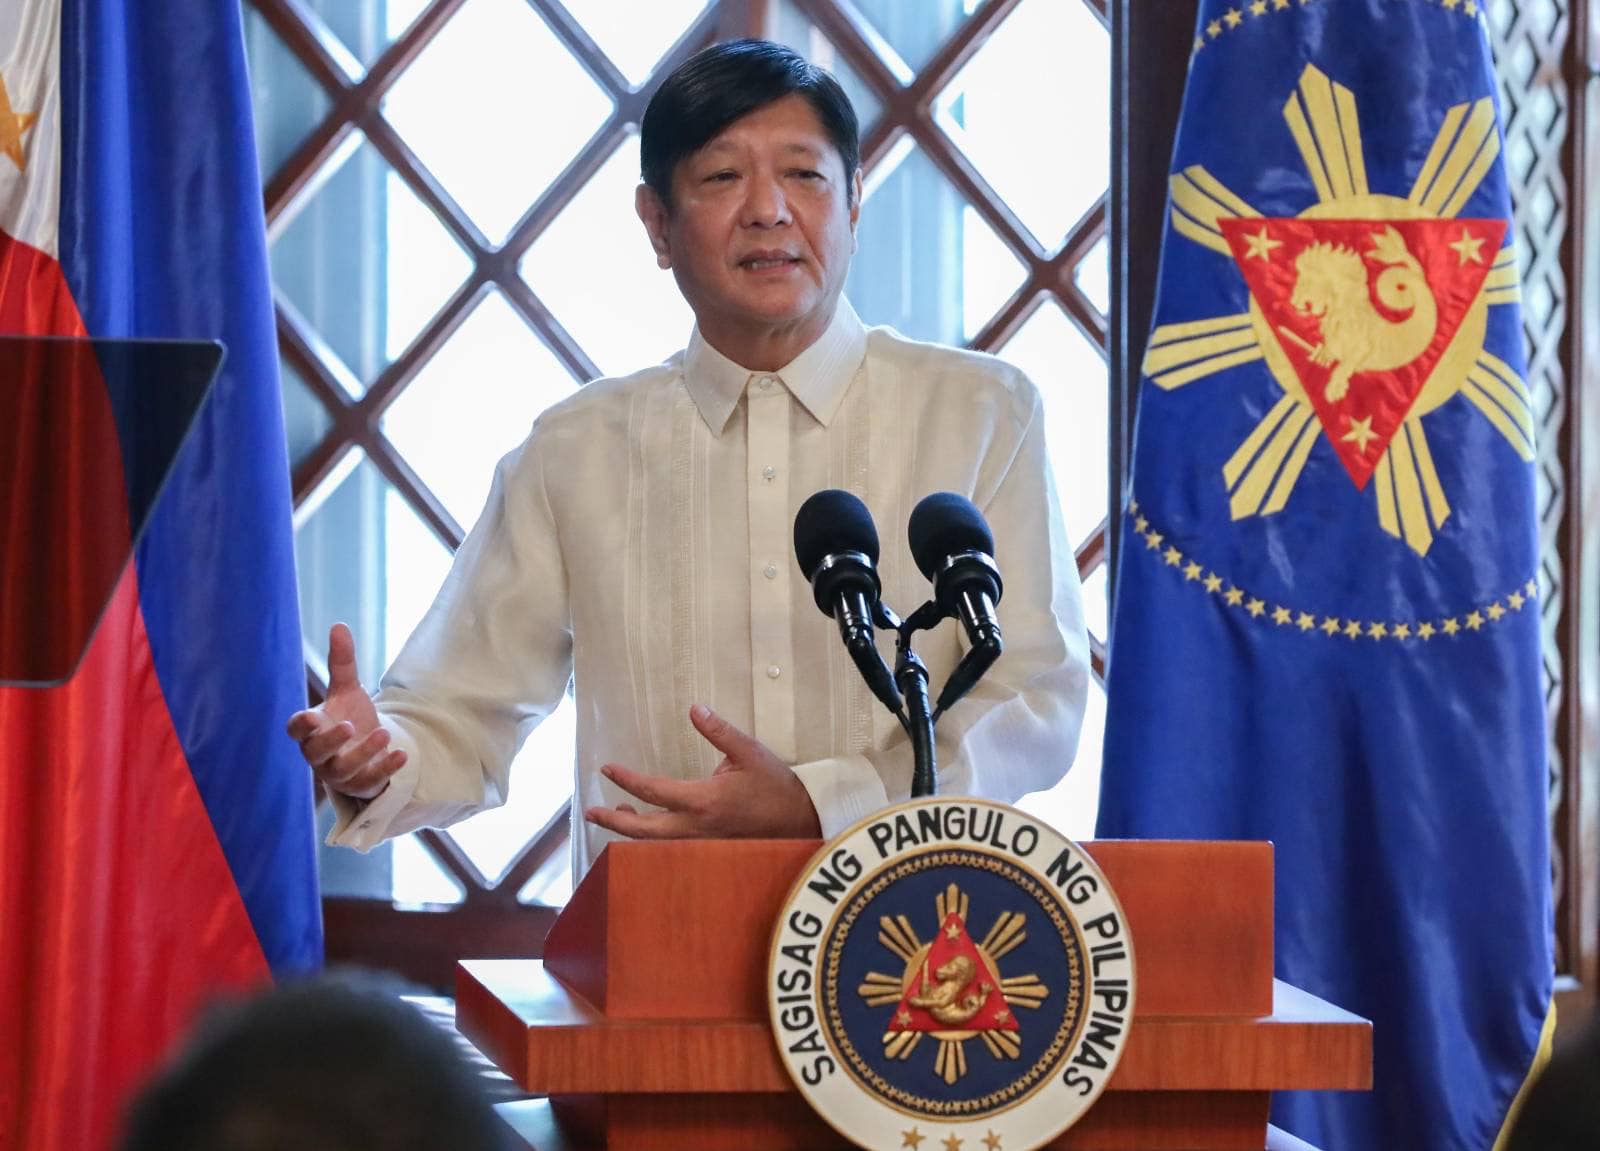 Photo of Philippine President having his speech